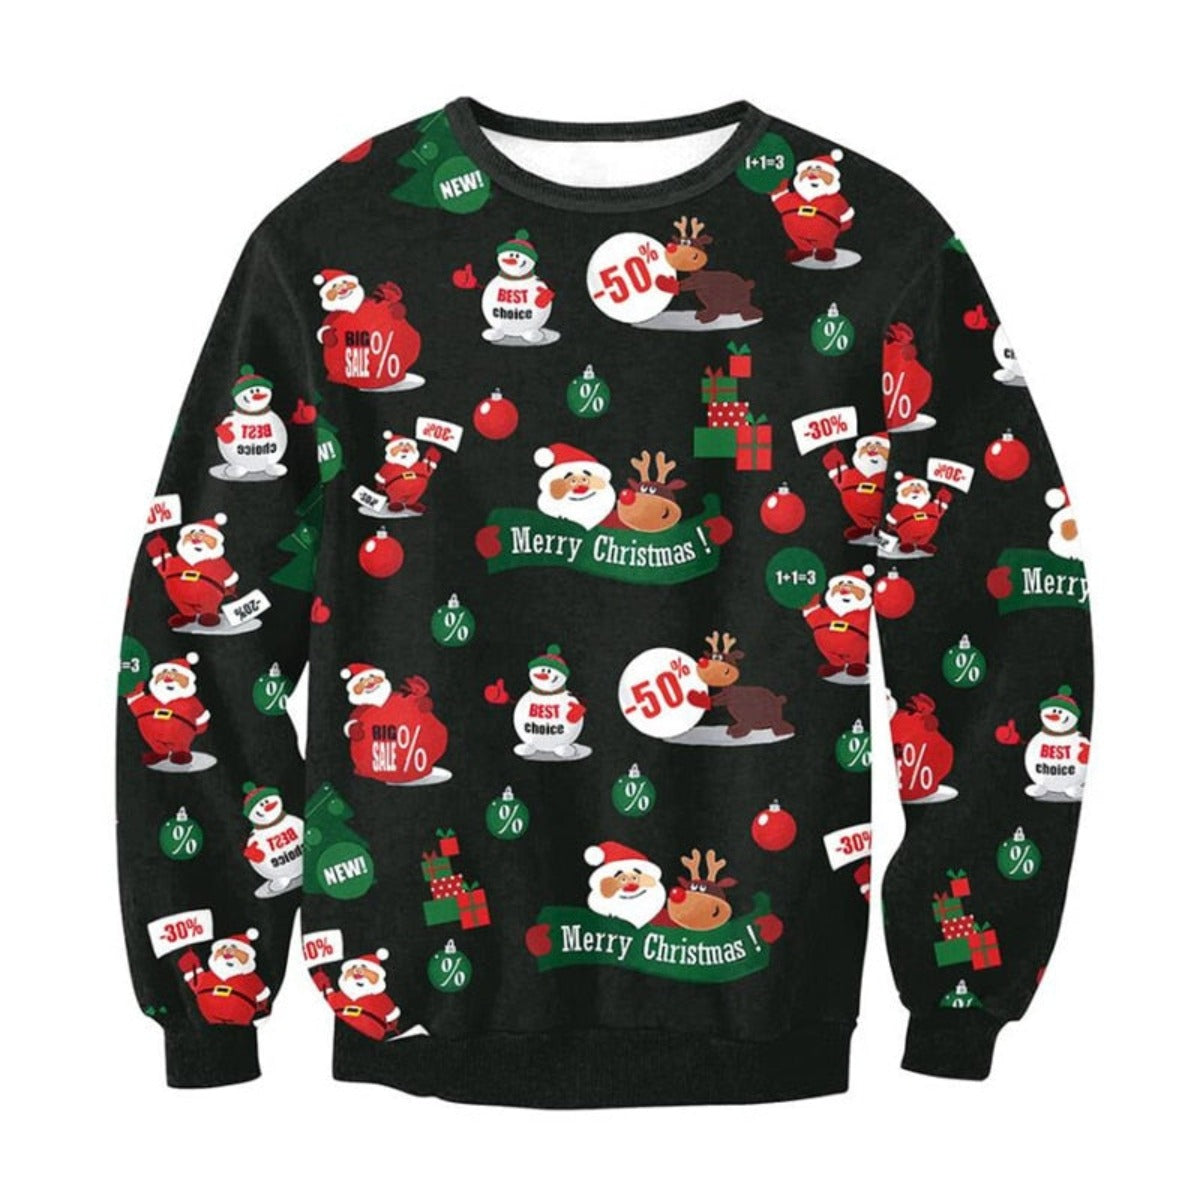 Christmas Big Sale Ugly Sweater